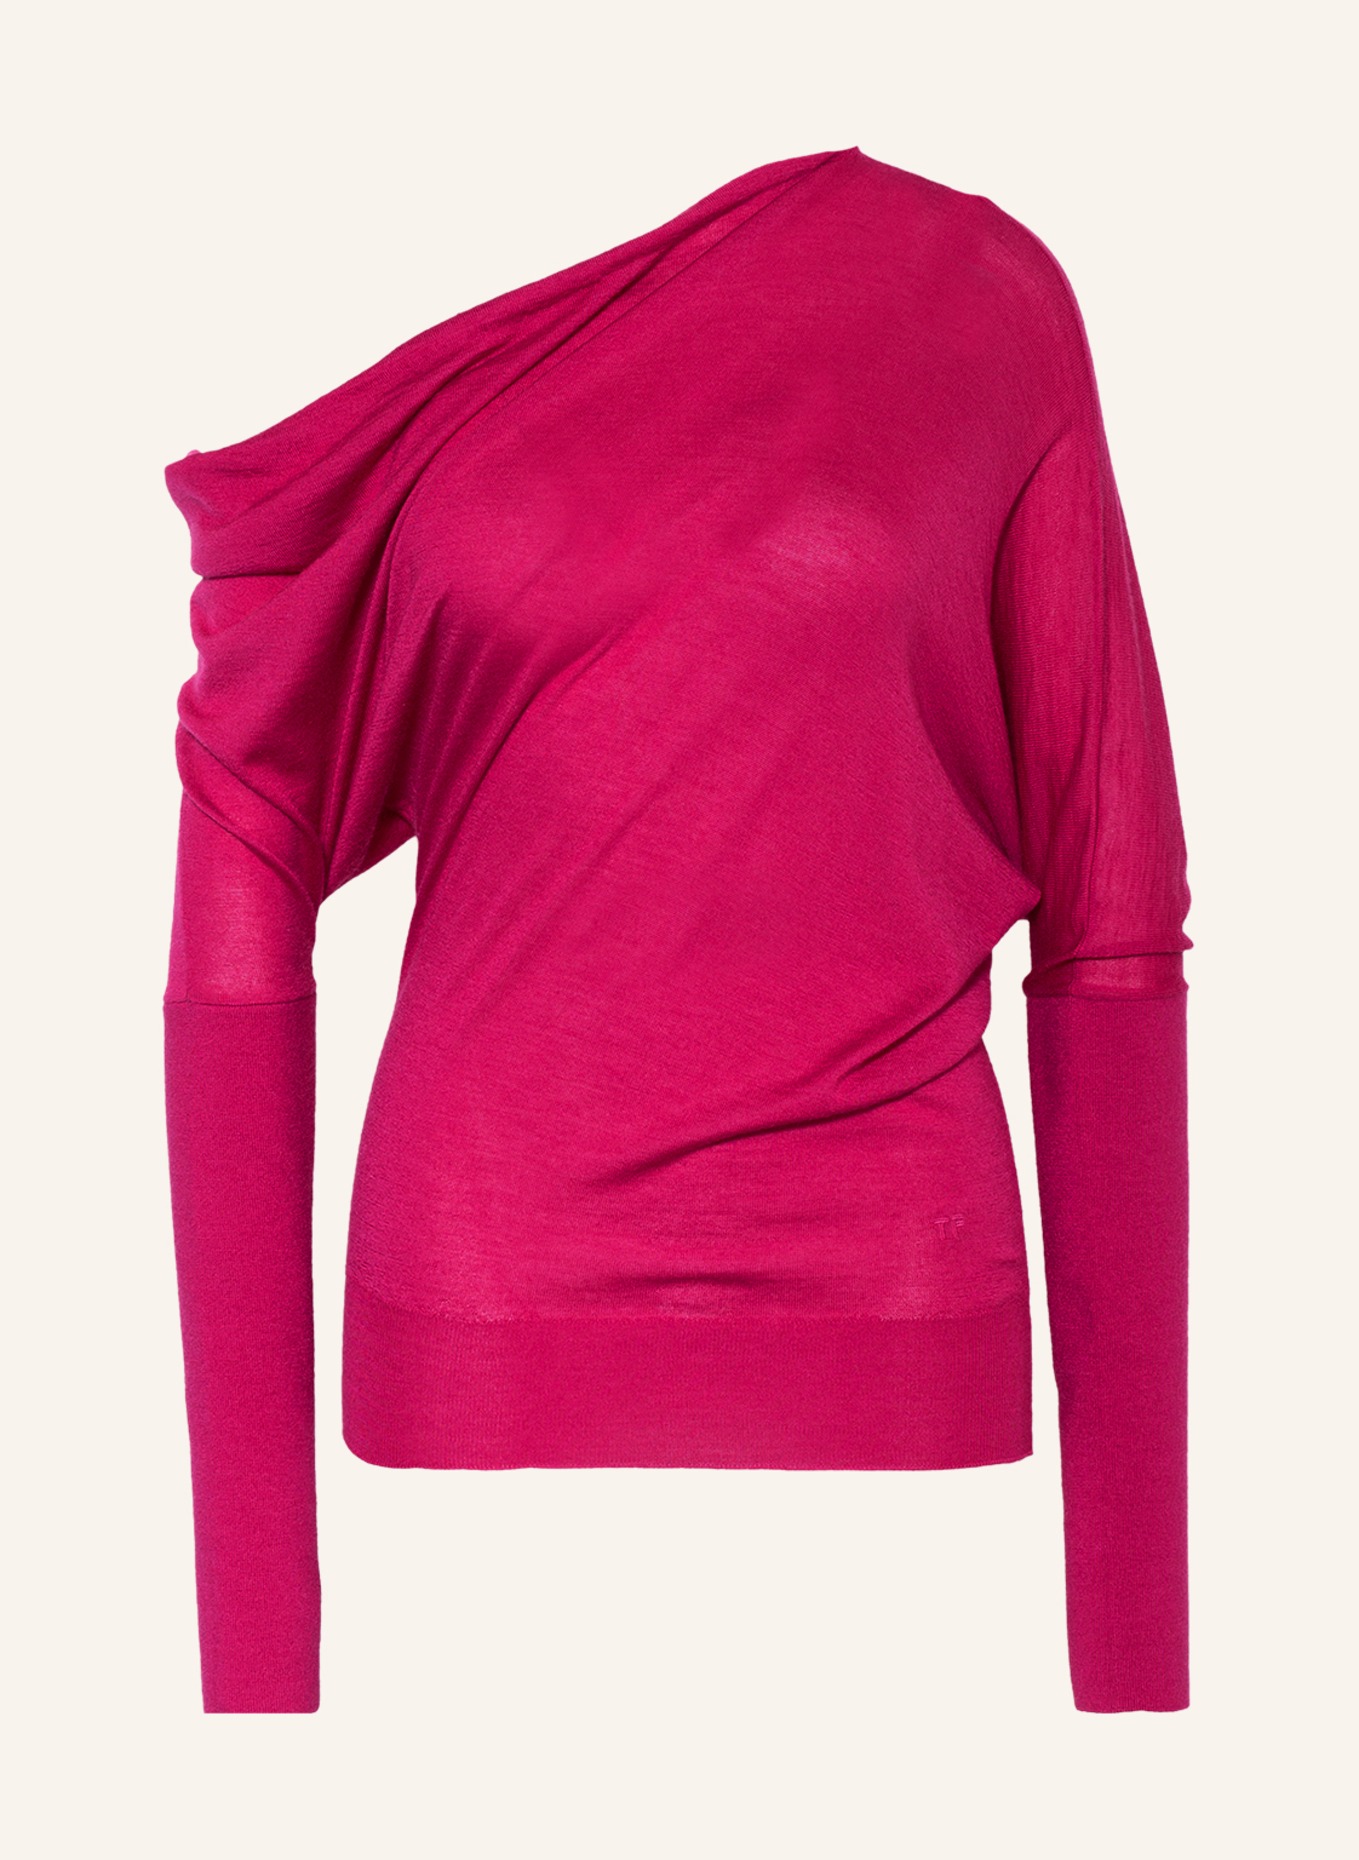 TOM FORD Cashmere-Pullover mit Seide, Farbe: PINK (Bild 1)